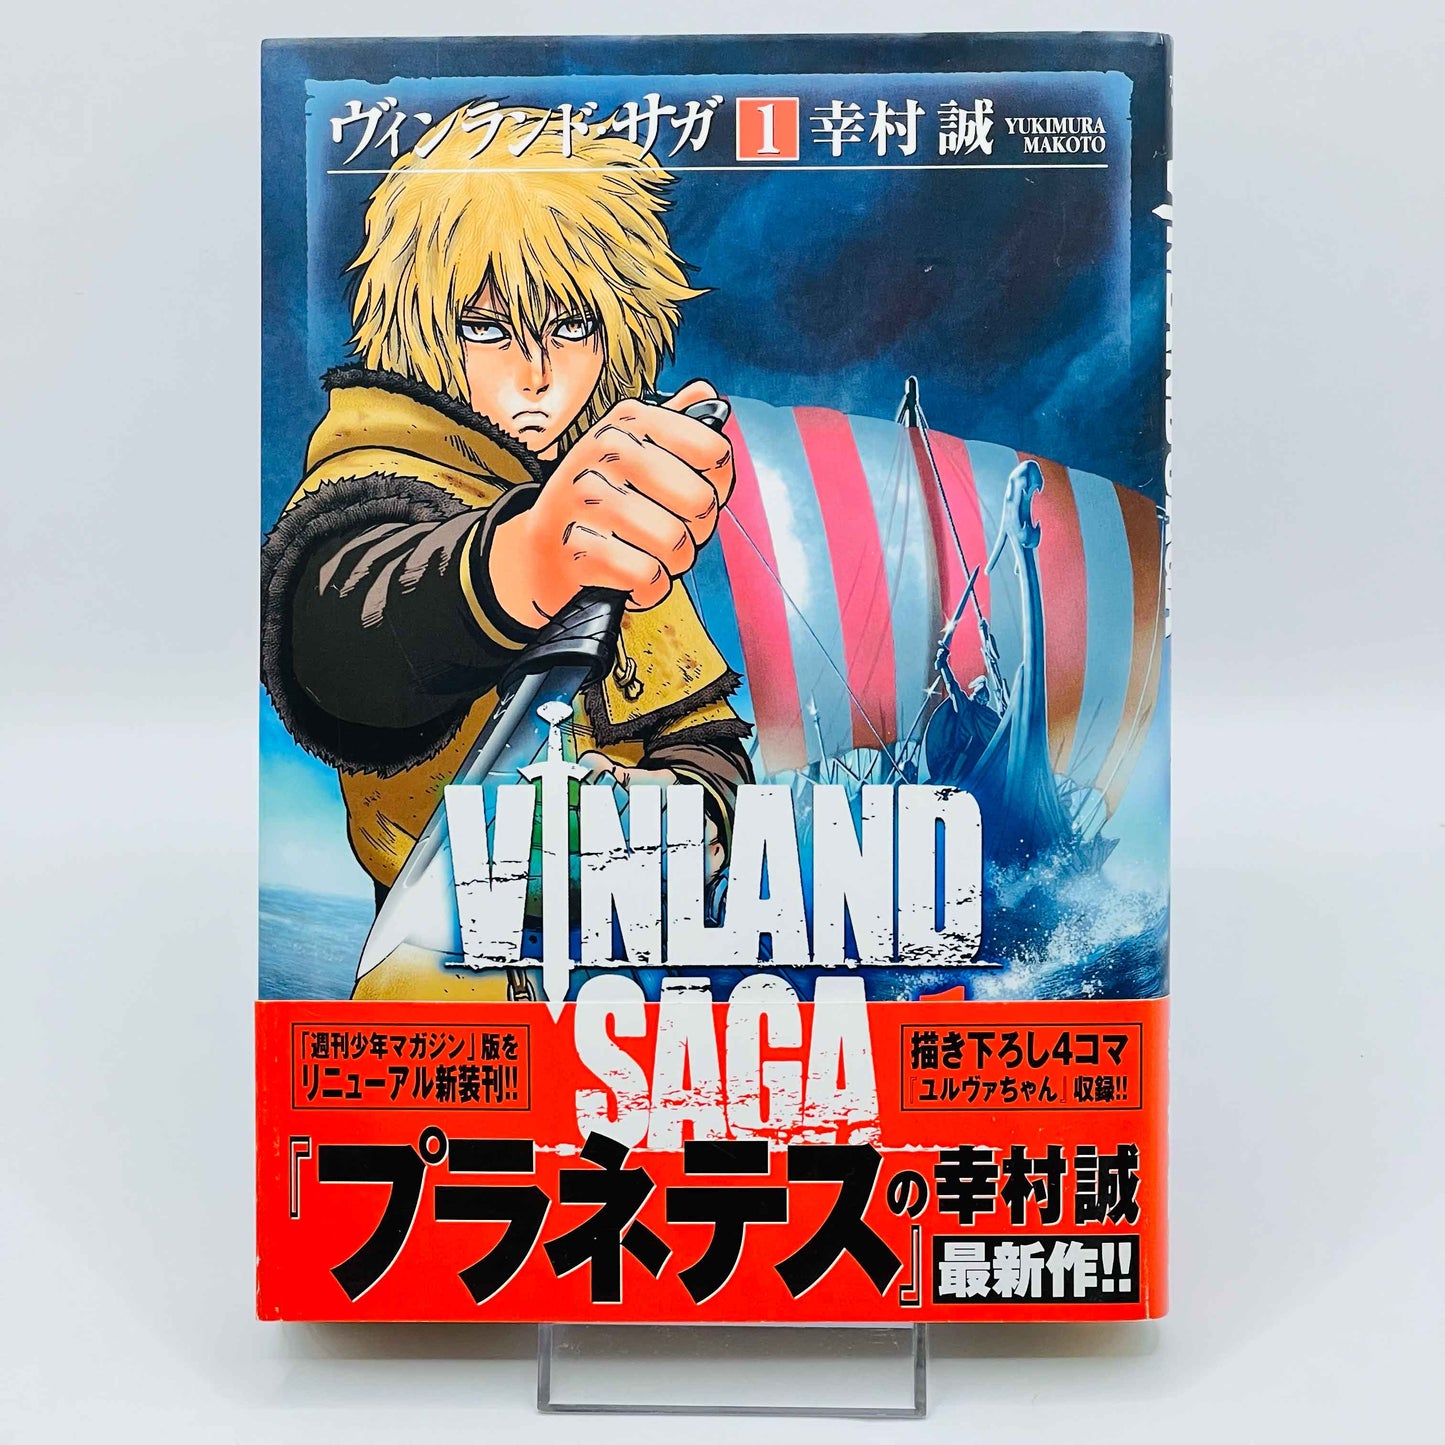 「Wish - Reserved」Vinland Saga - Volume 01 02 03 /w Obi - 1stPrint.net - 1st First Print Edition Manga Store - M-VINL-LOT-001